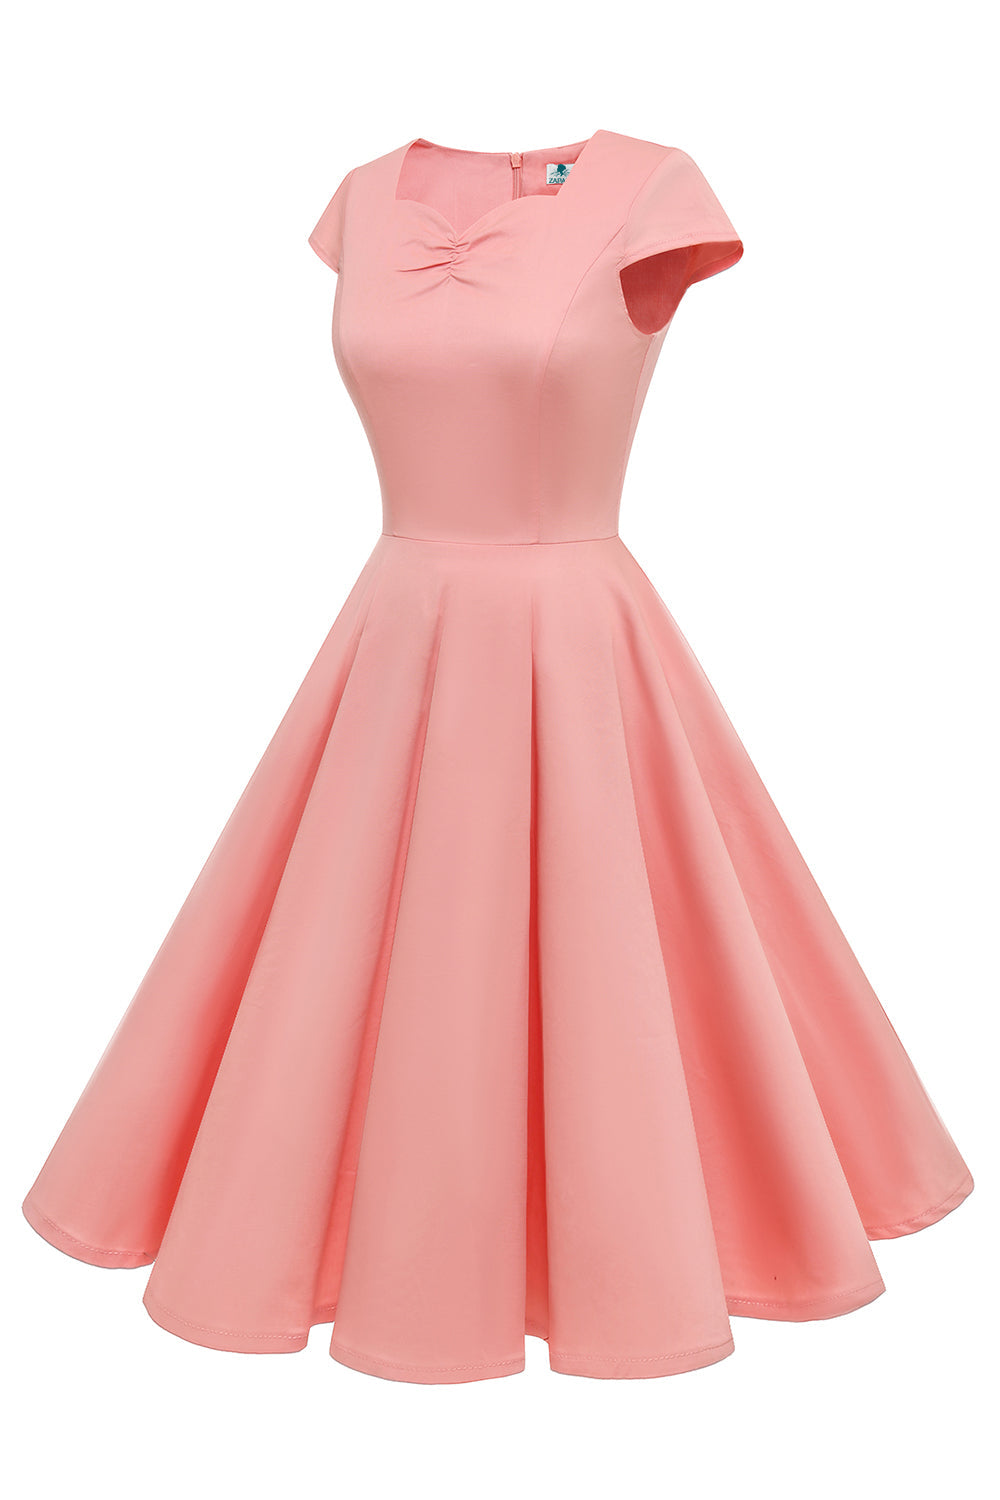 Retro Style Sweetheart 1950s Dress